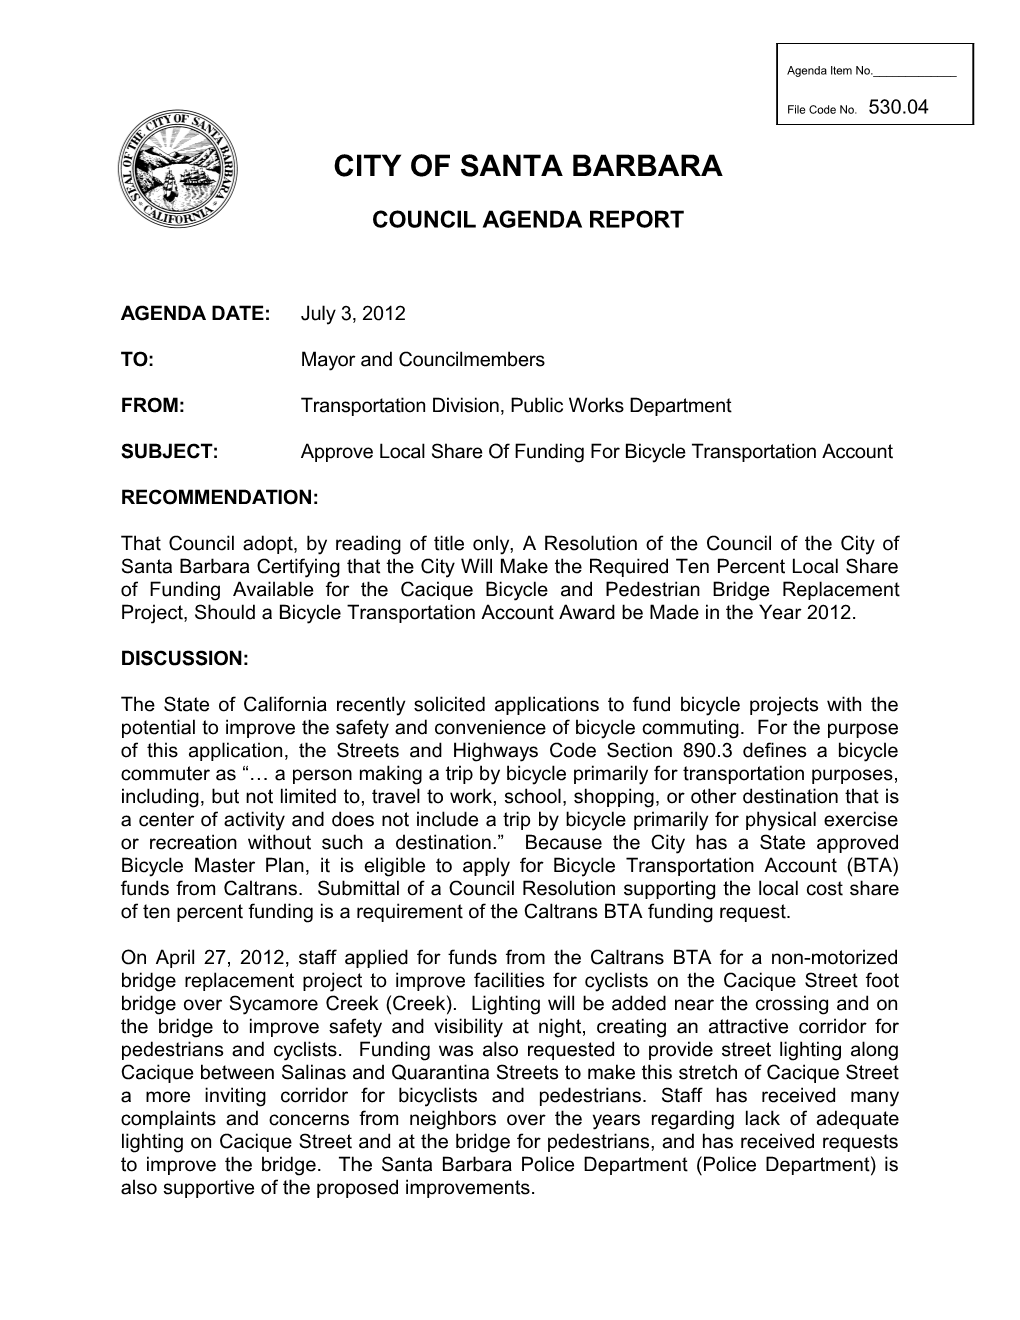 City of Santa Barbara s18